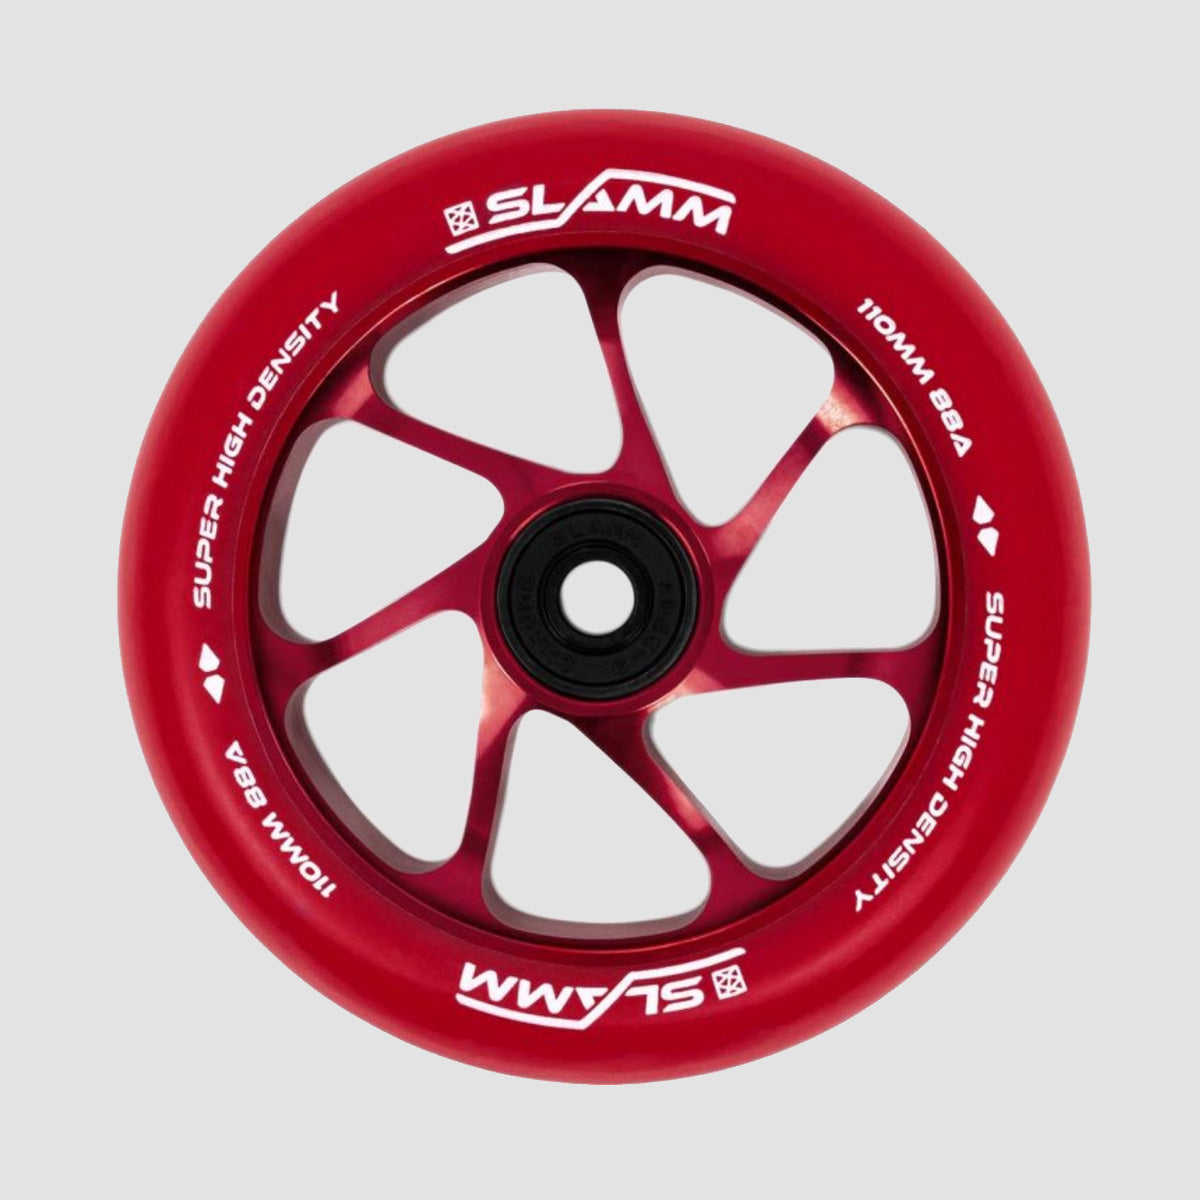 Slamm Team Wheel x1 Red/Red 110mm